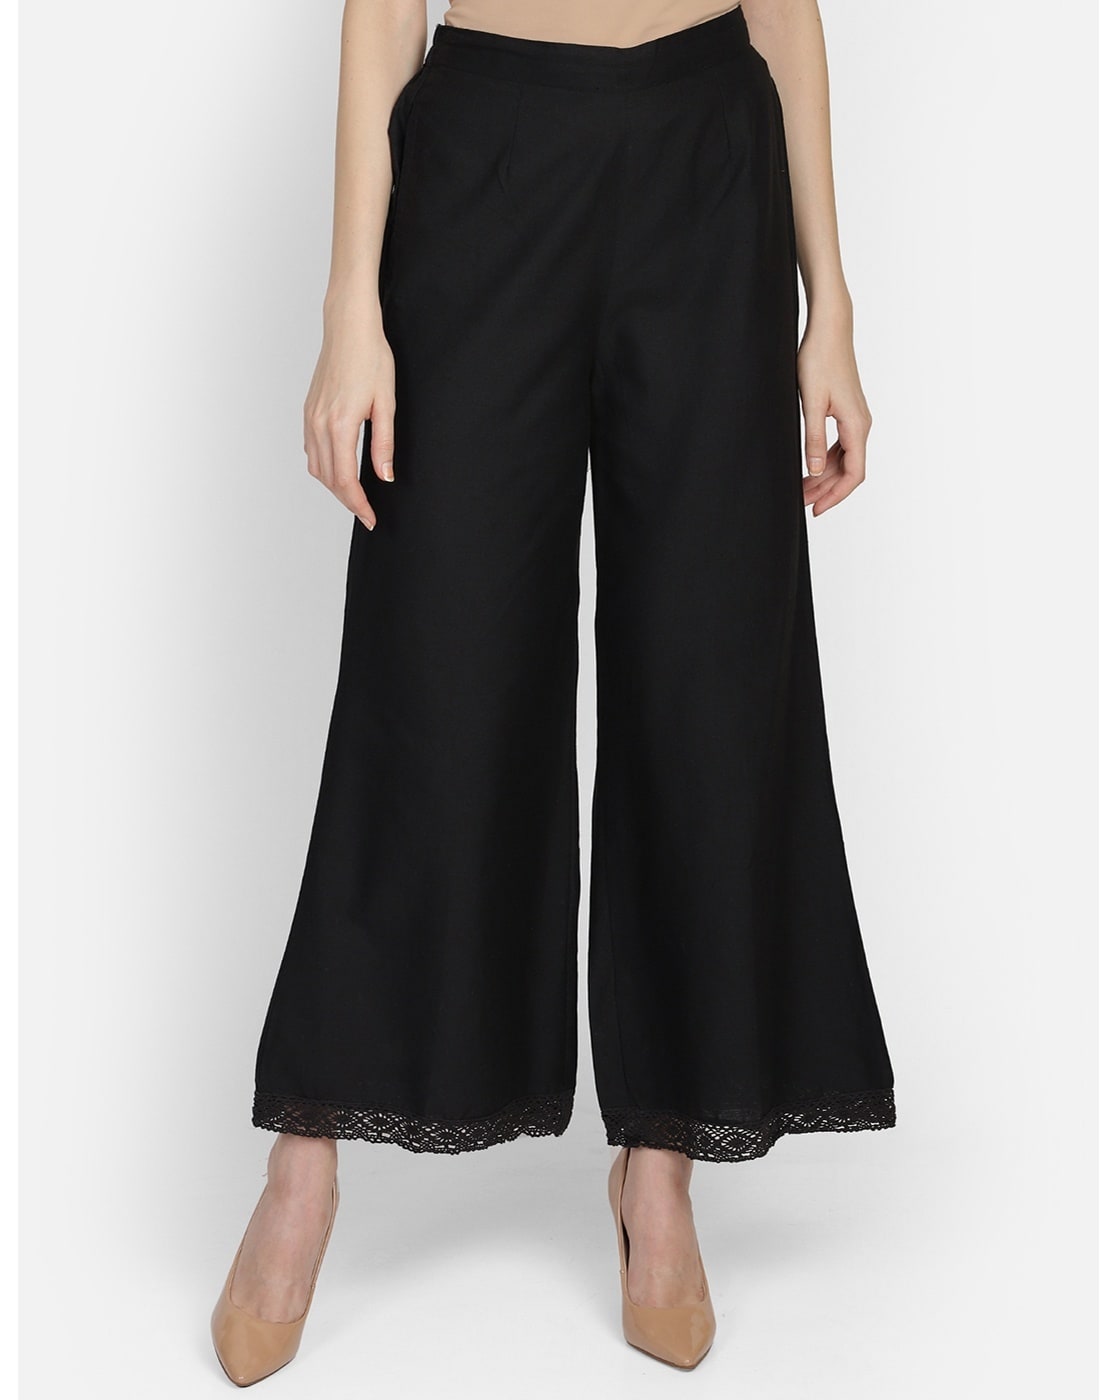 Plus Size Plus Size Black Tropical Print High Waist Pants Online in India |  Amydus